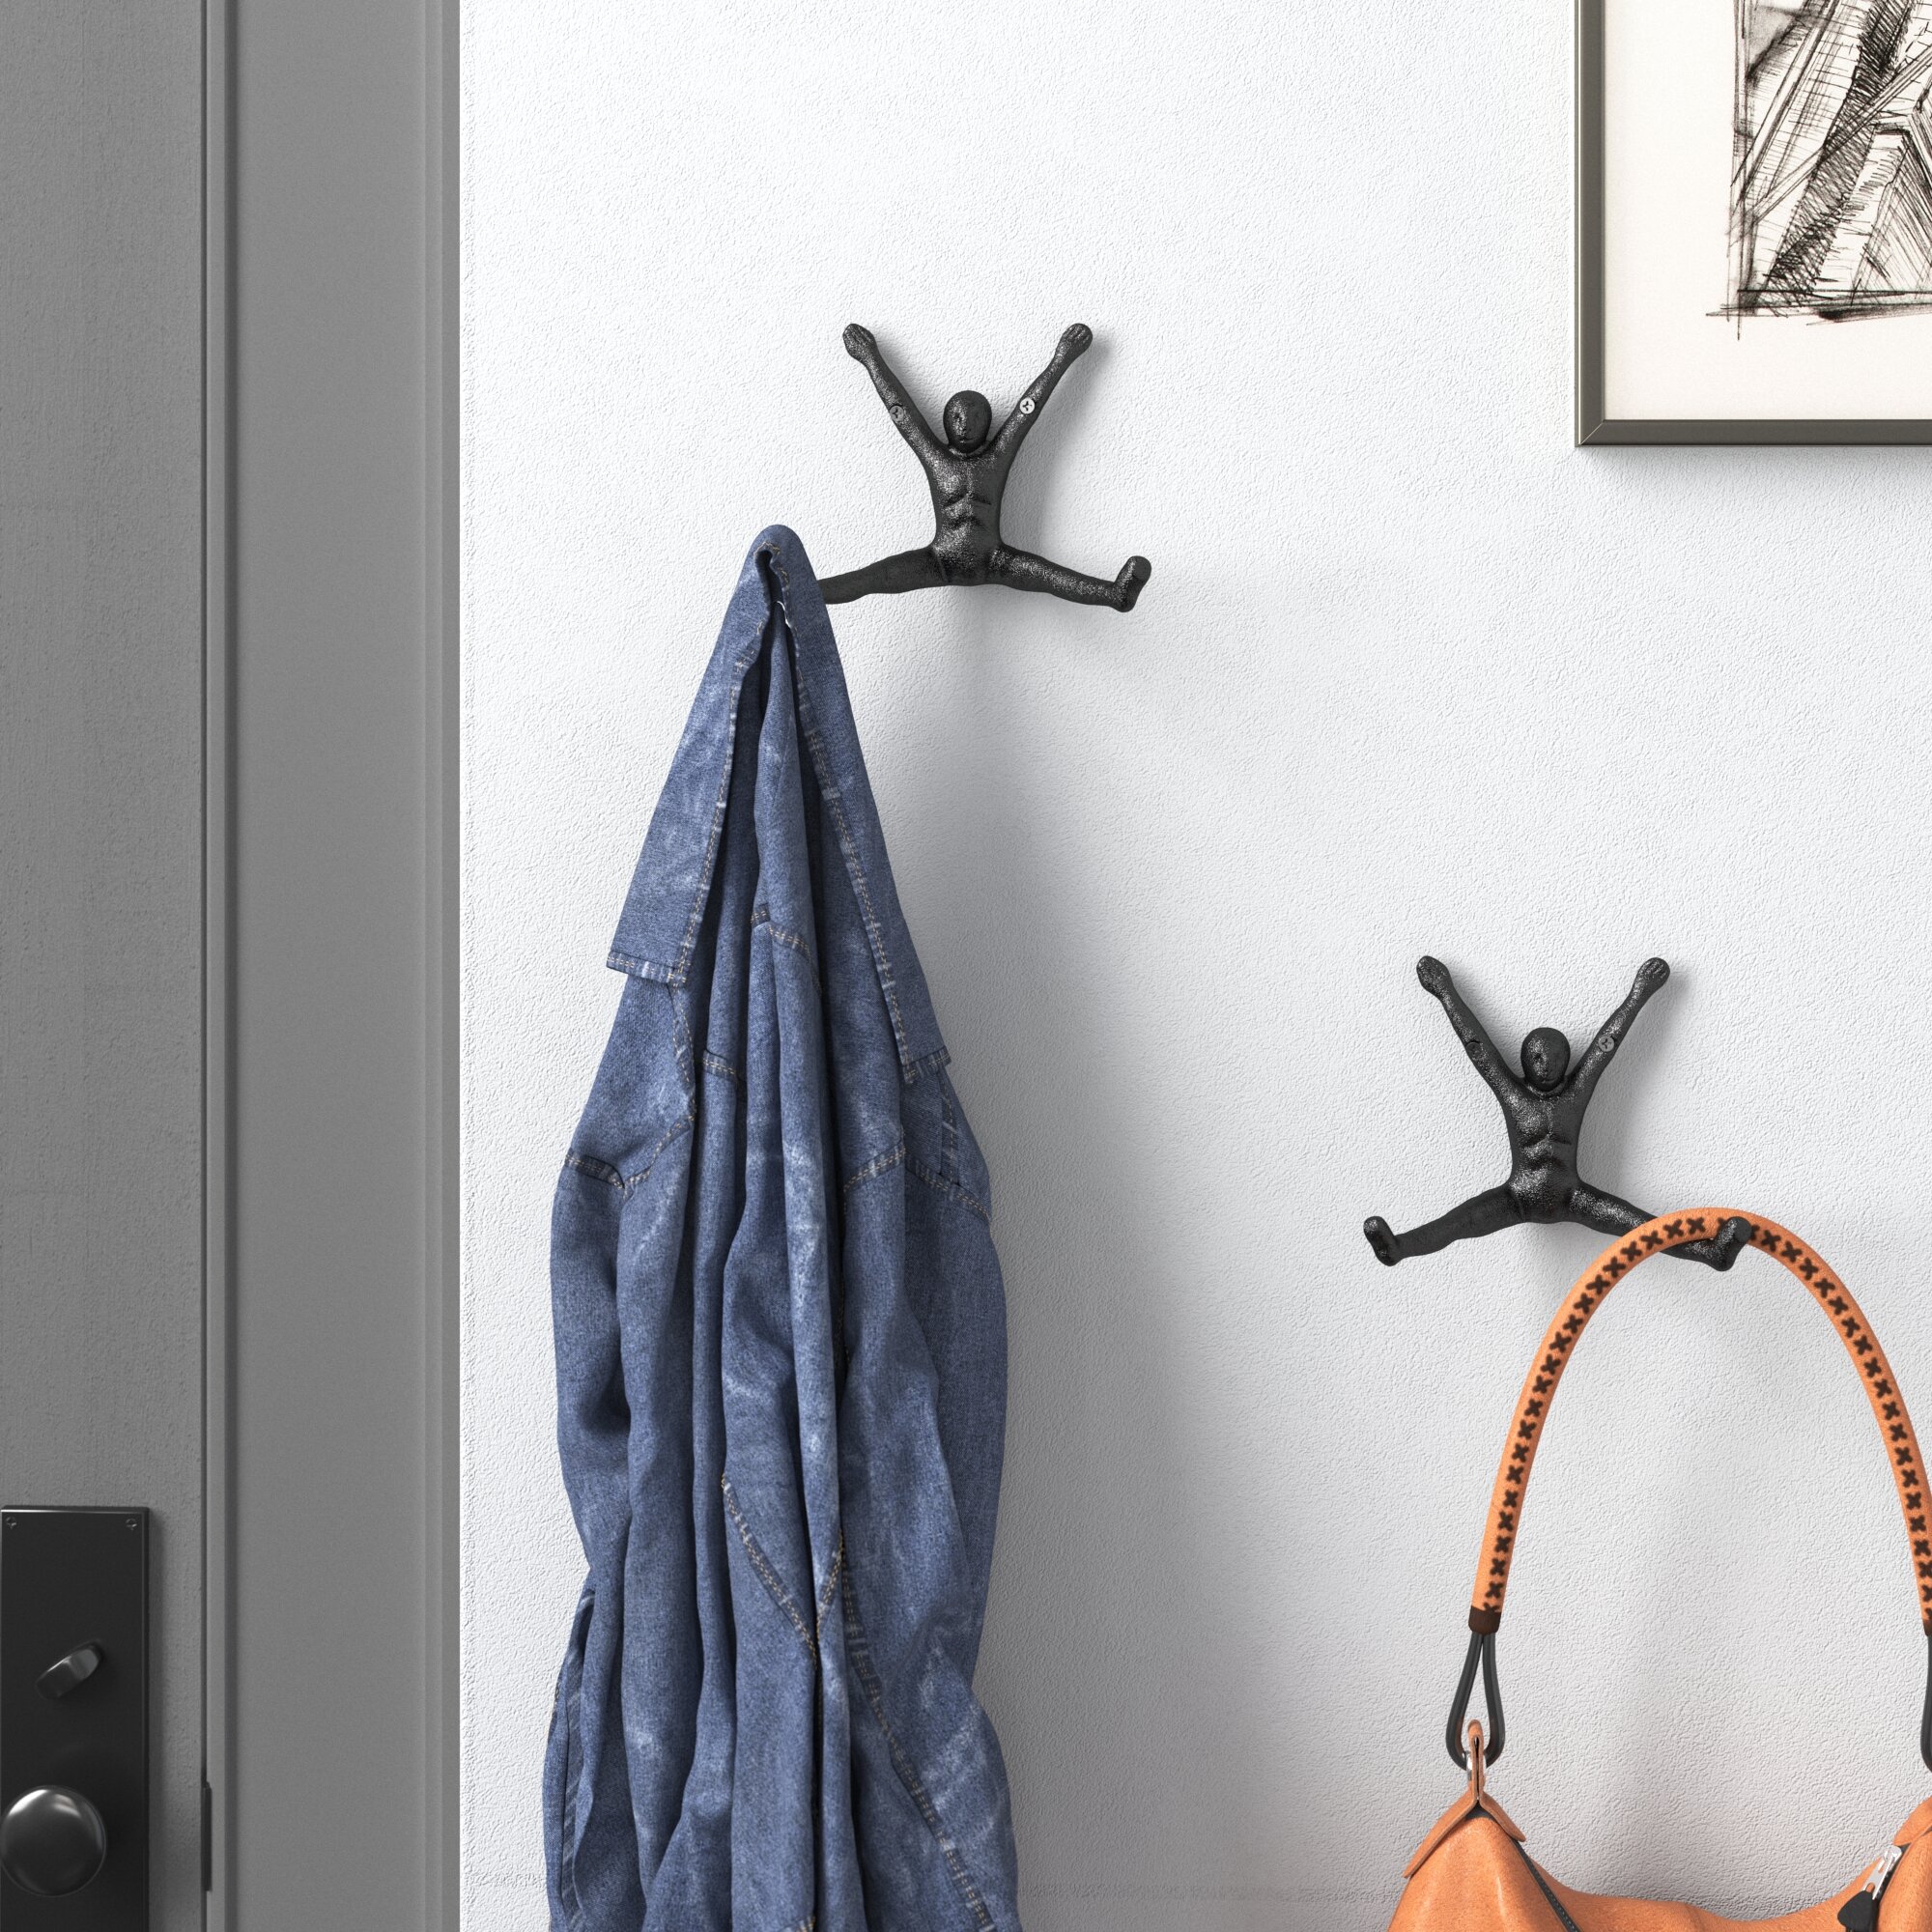 Vintage Iron Hooks - Decorative Hooks For Wall Hanging - Decorative Hooks  For Hanging Things On Wall, Christmas Tree/Elk Wall Hanger Design